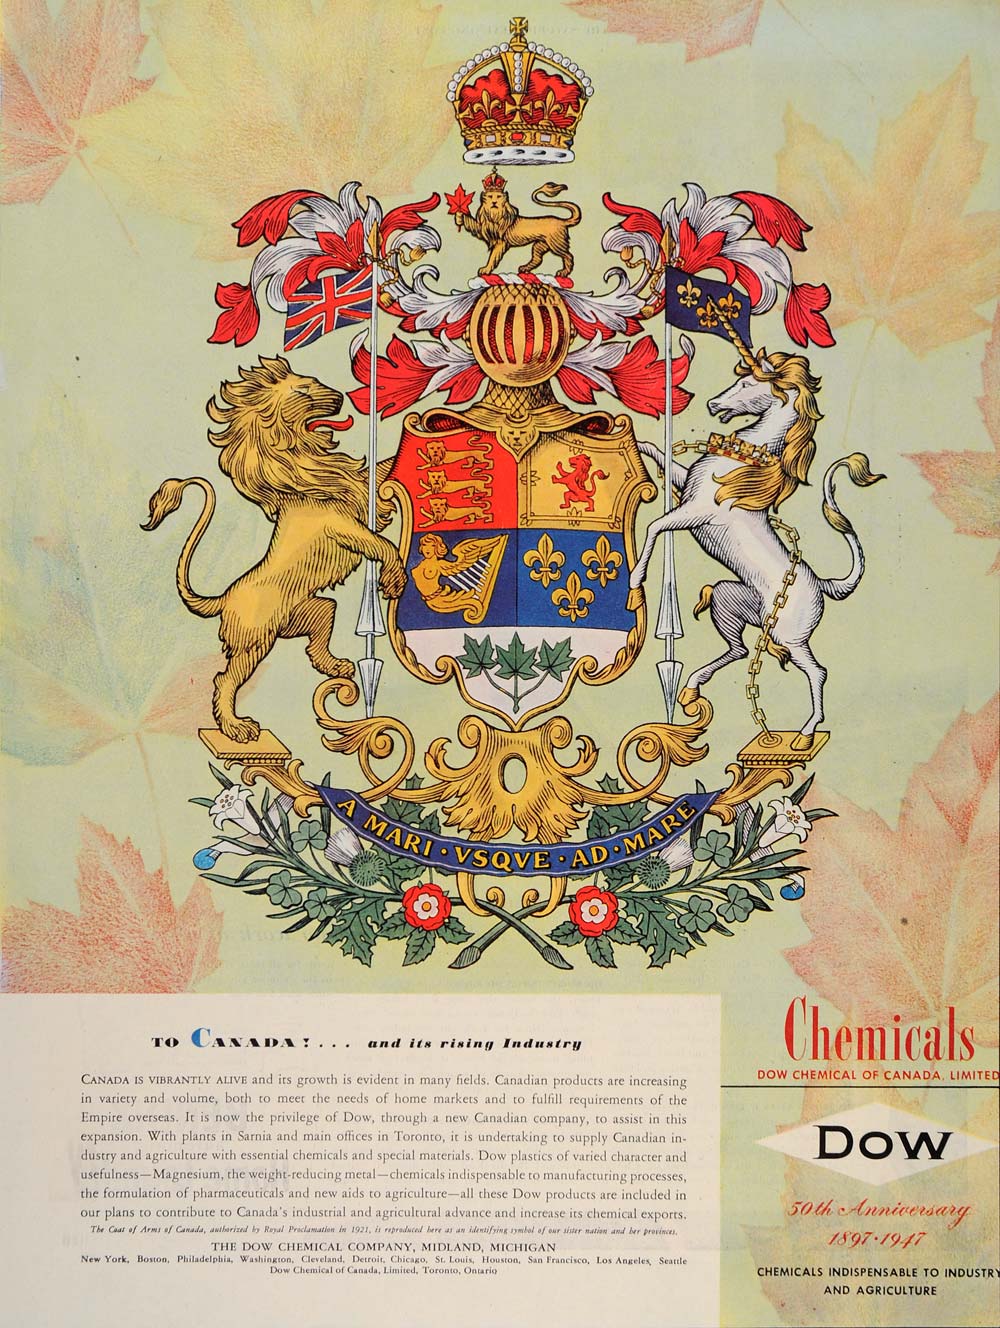 1947 Ad DOW Chemicals A Mari Vsque Ad Mare Canada Crest - ORIGINAL SEP3